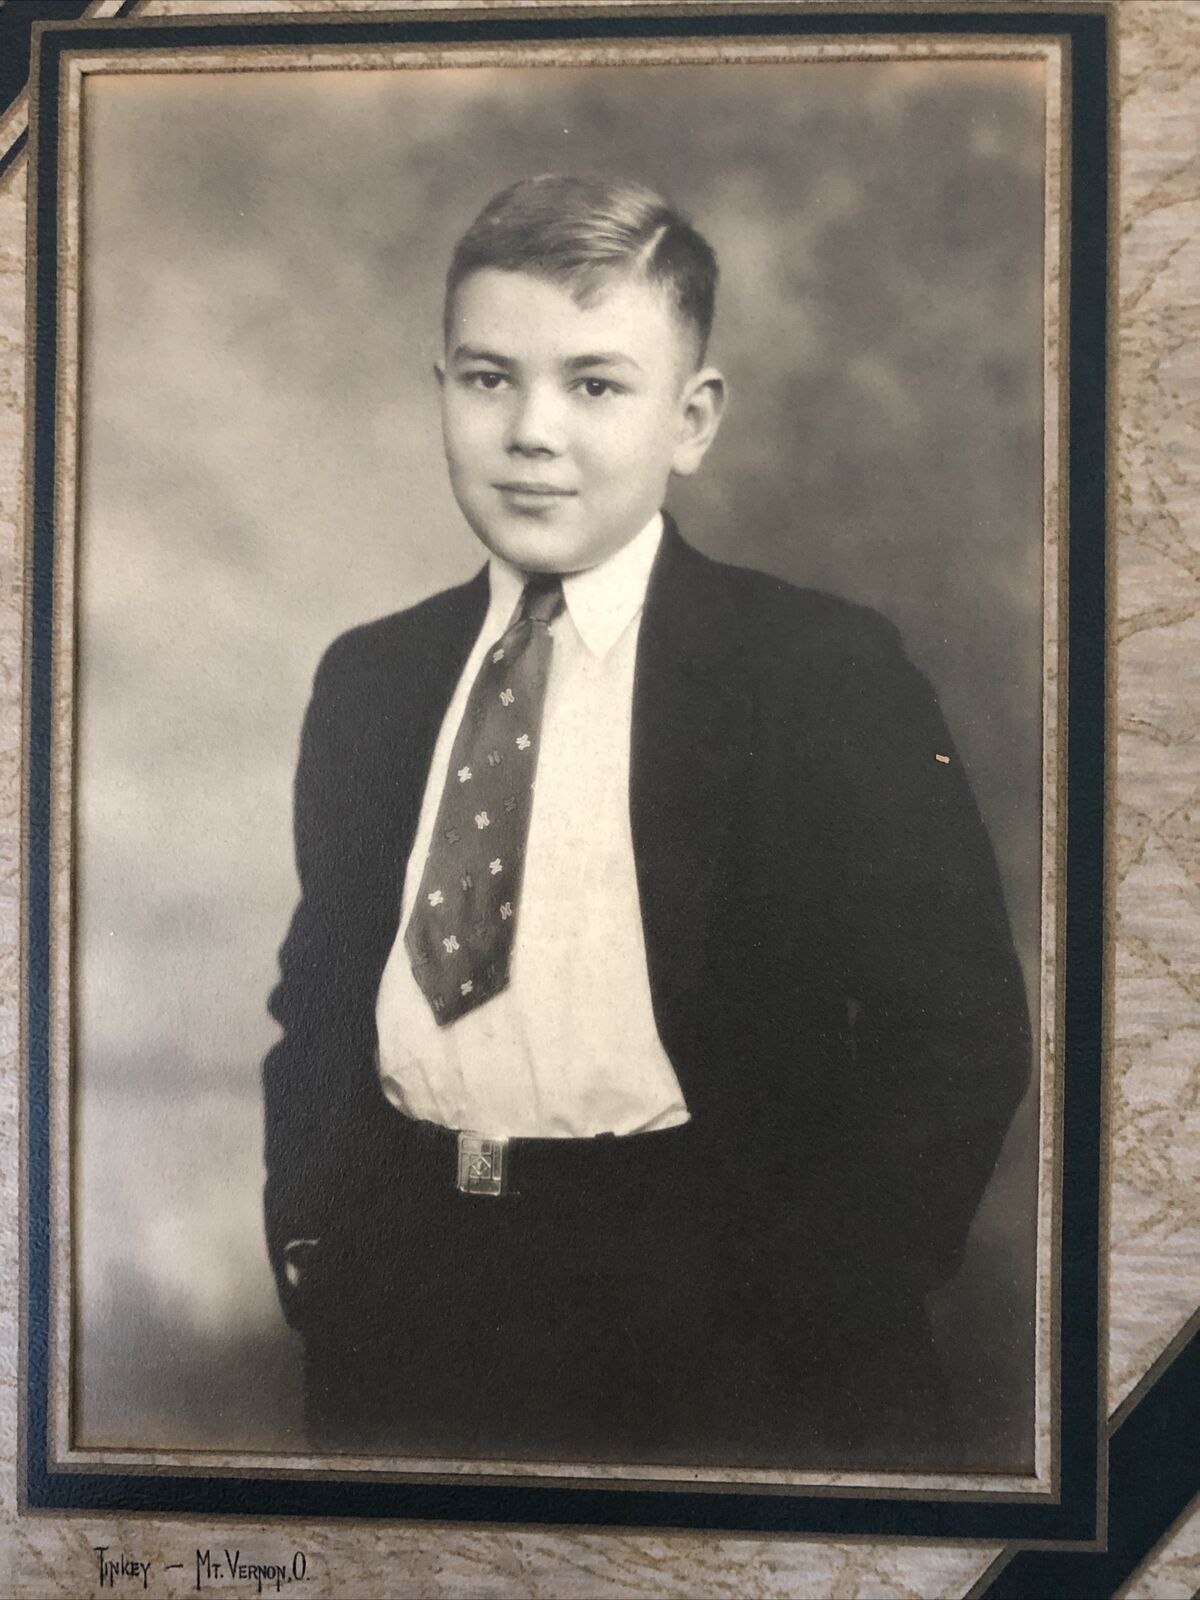 Vintage photo young boy handsome suit adolescent Tinkey Mt. Mount Vernon OH Ohio